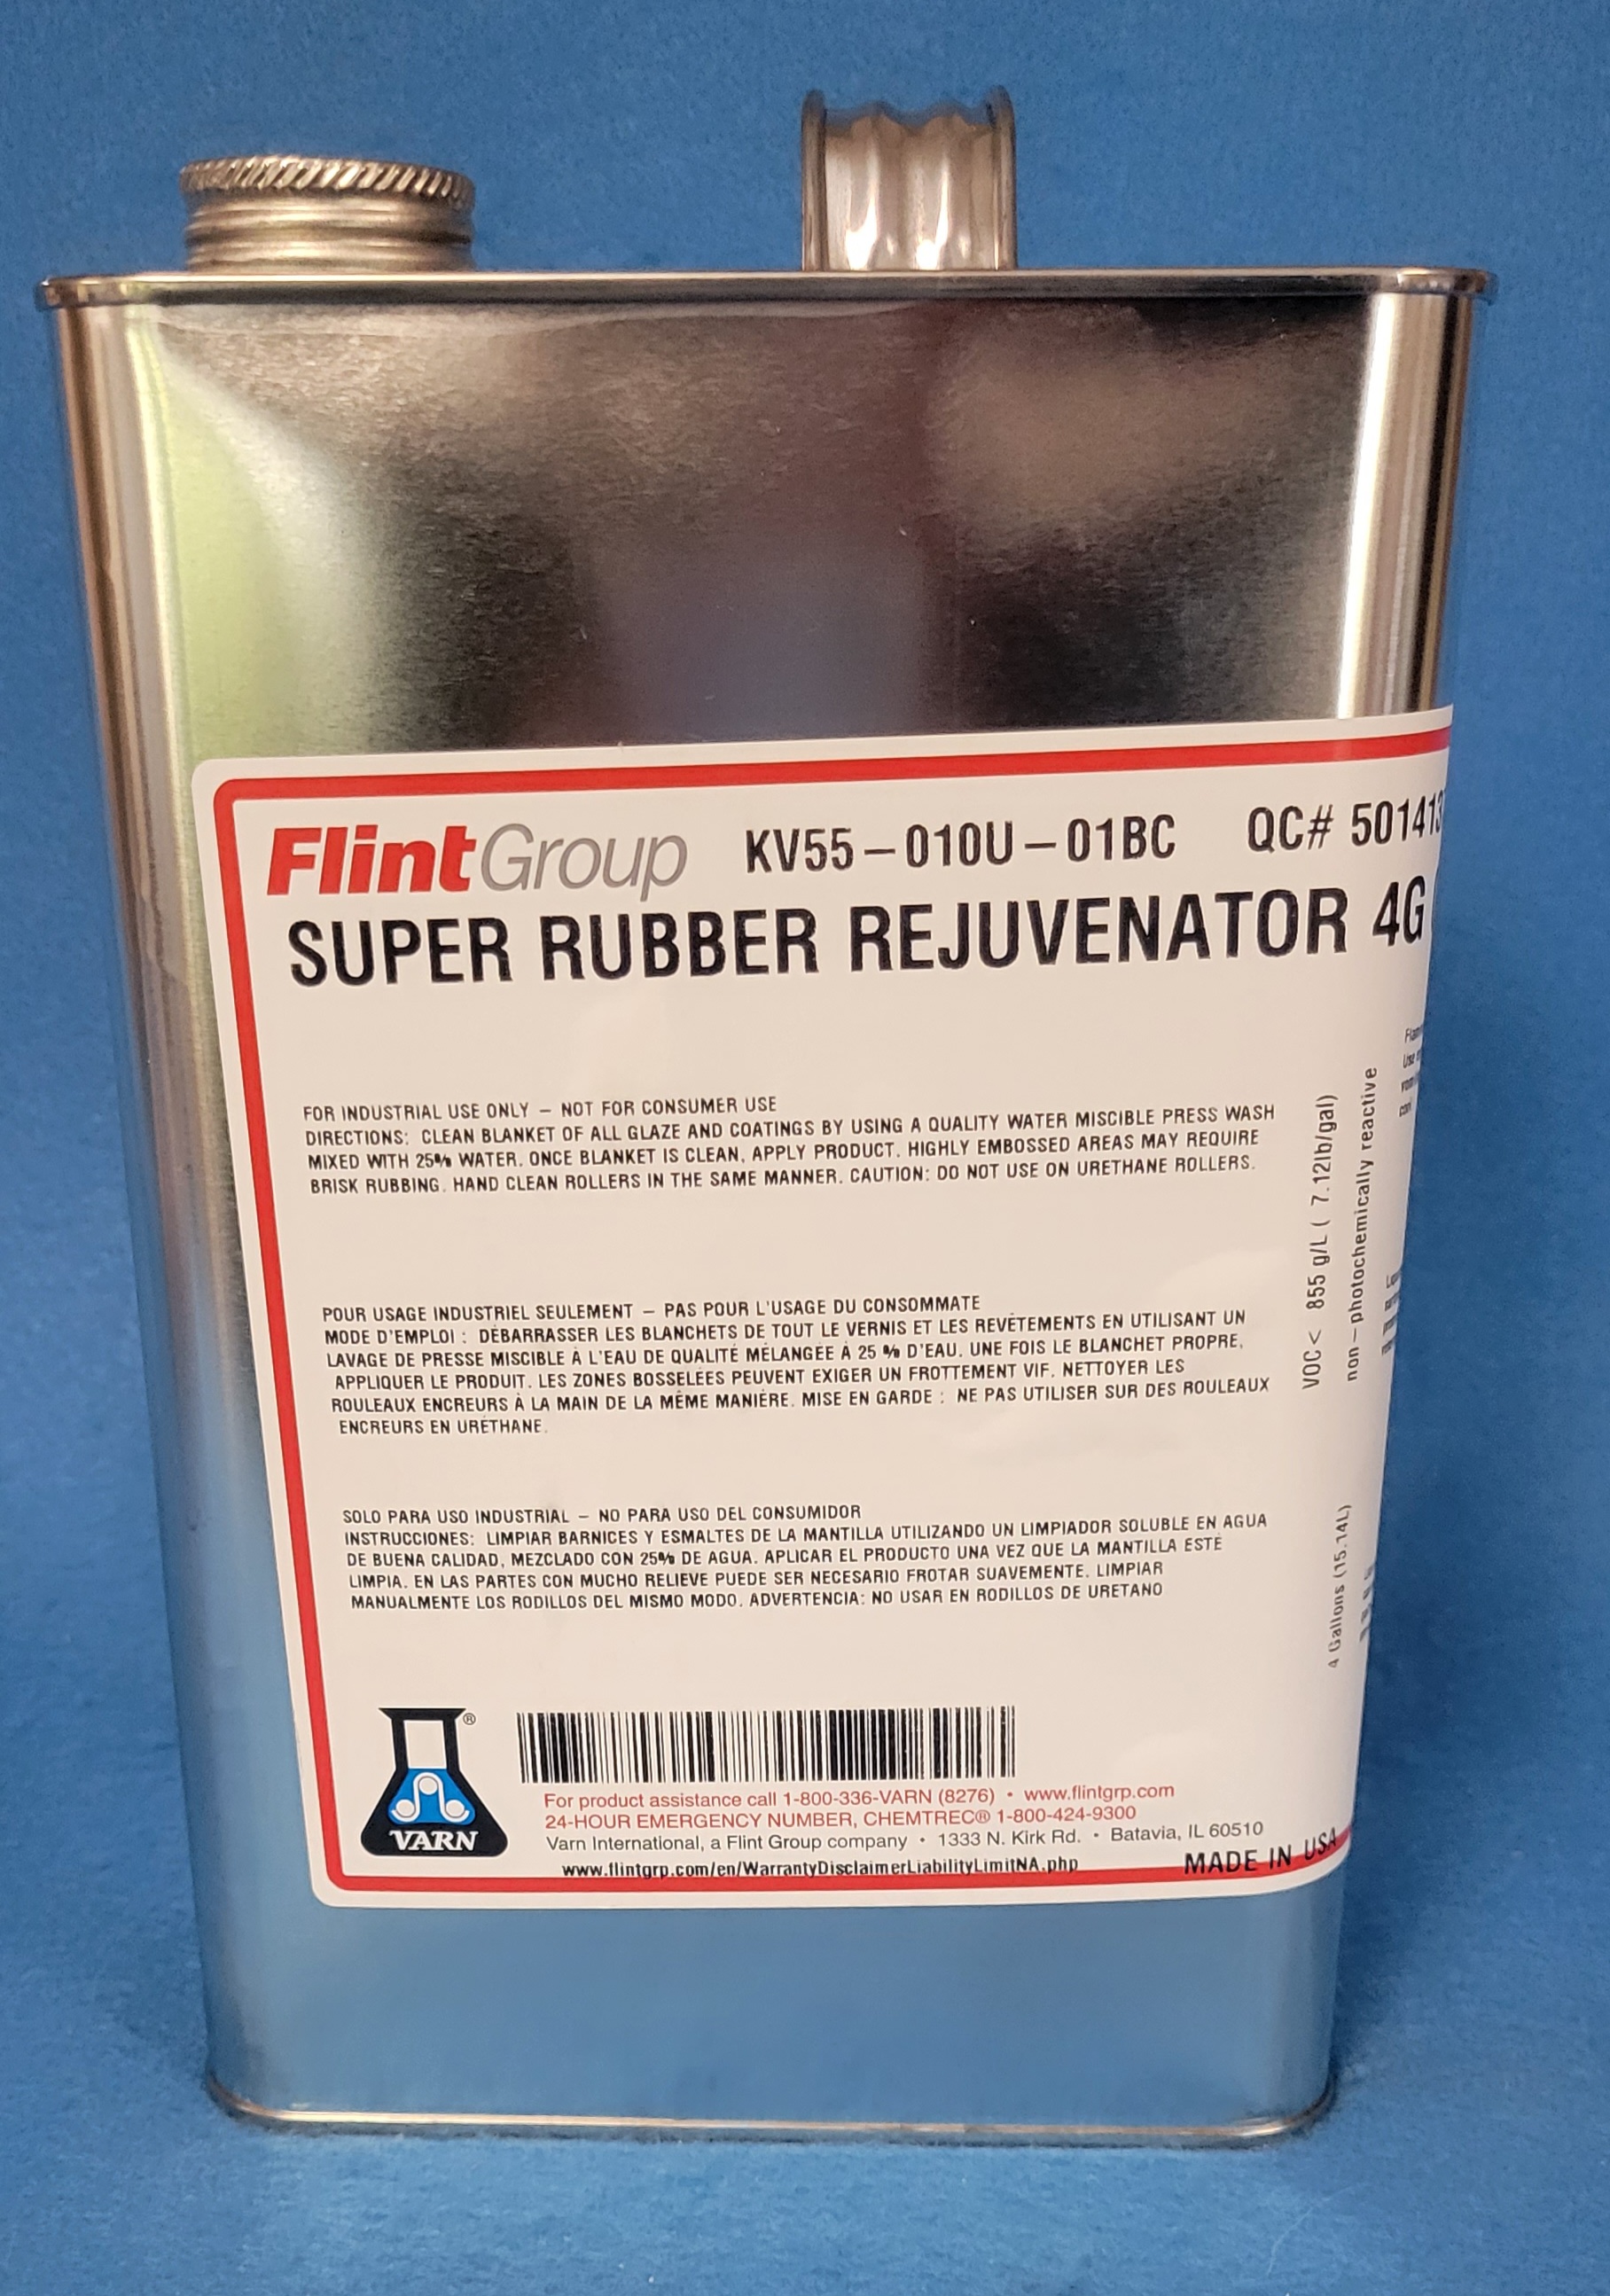 Super Rubber Rejuvenator 1 Gallon. Our stock number: SUPRUB [KV55